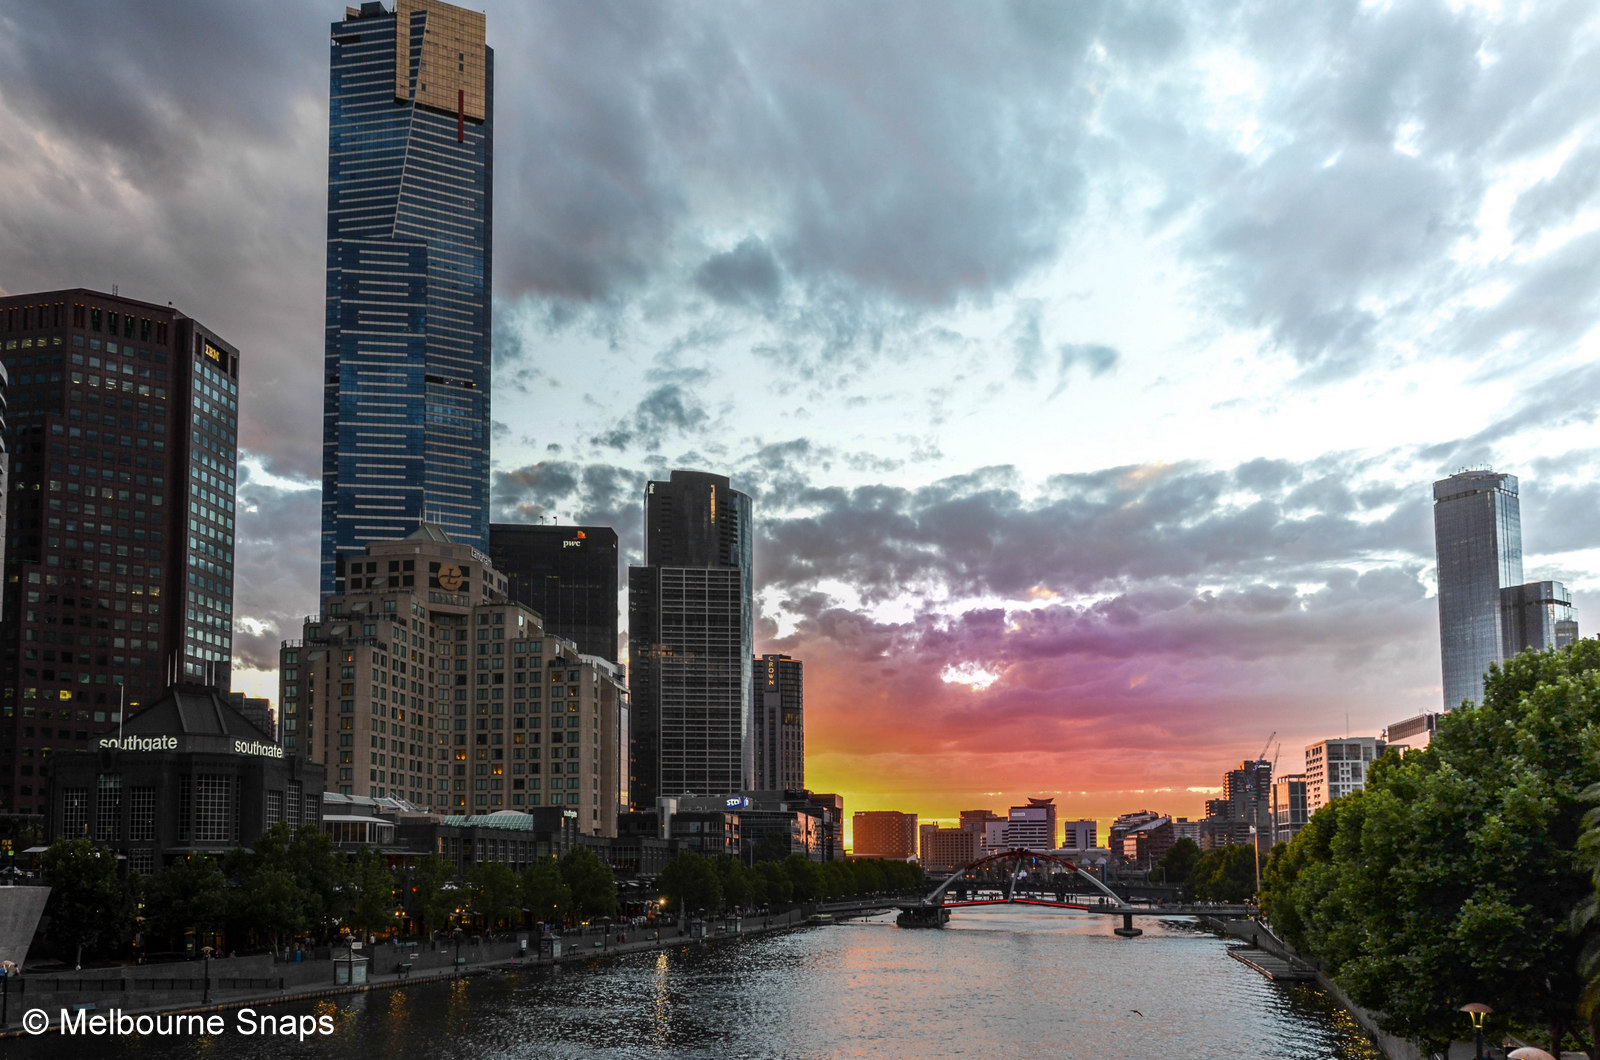 MELBOURNE.SNAPS: Melbourne Sunset